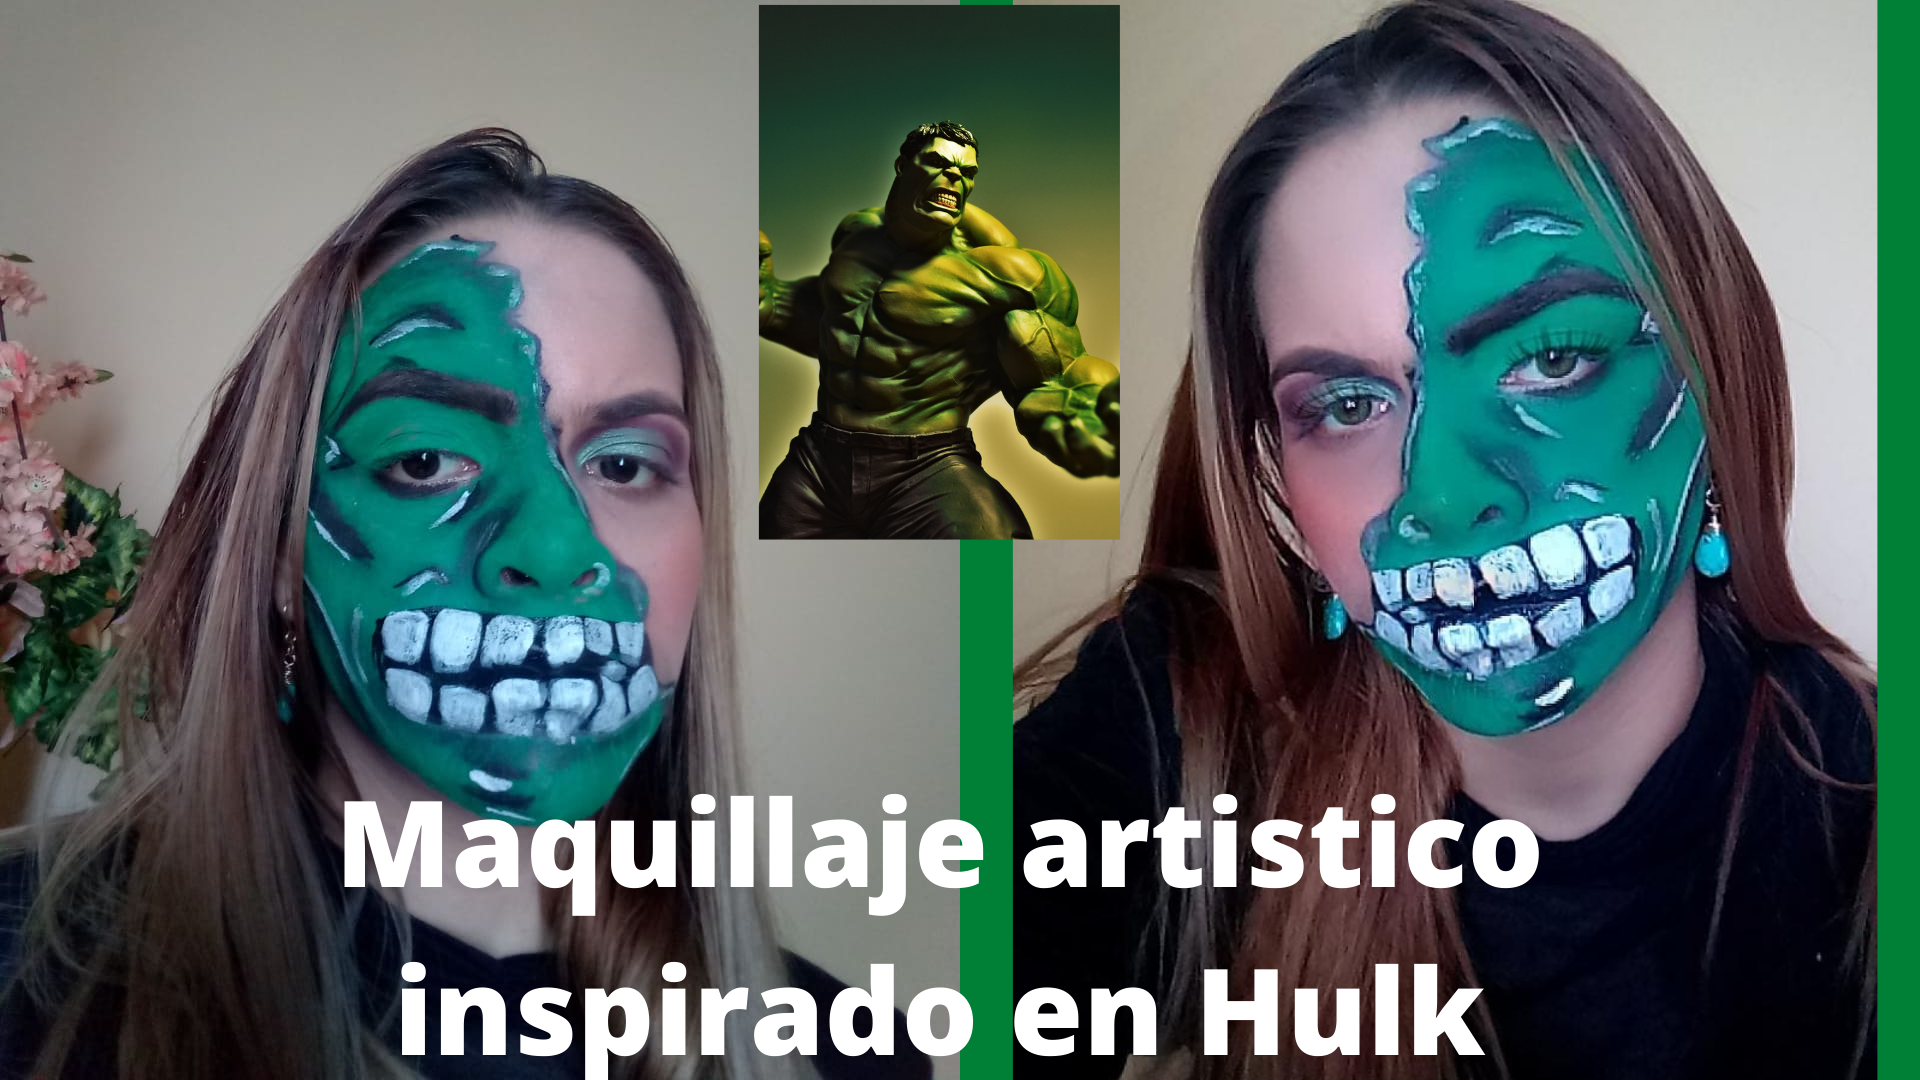 Maquillaje artistico inspirado en Hulk.png